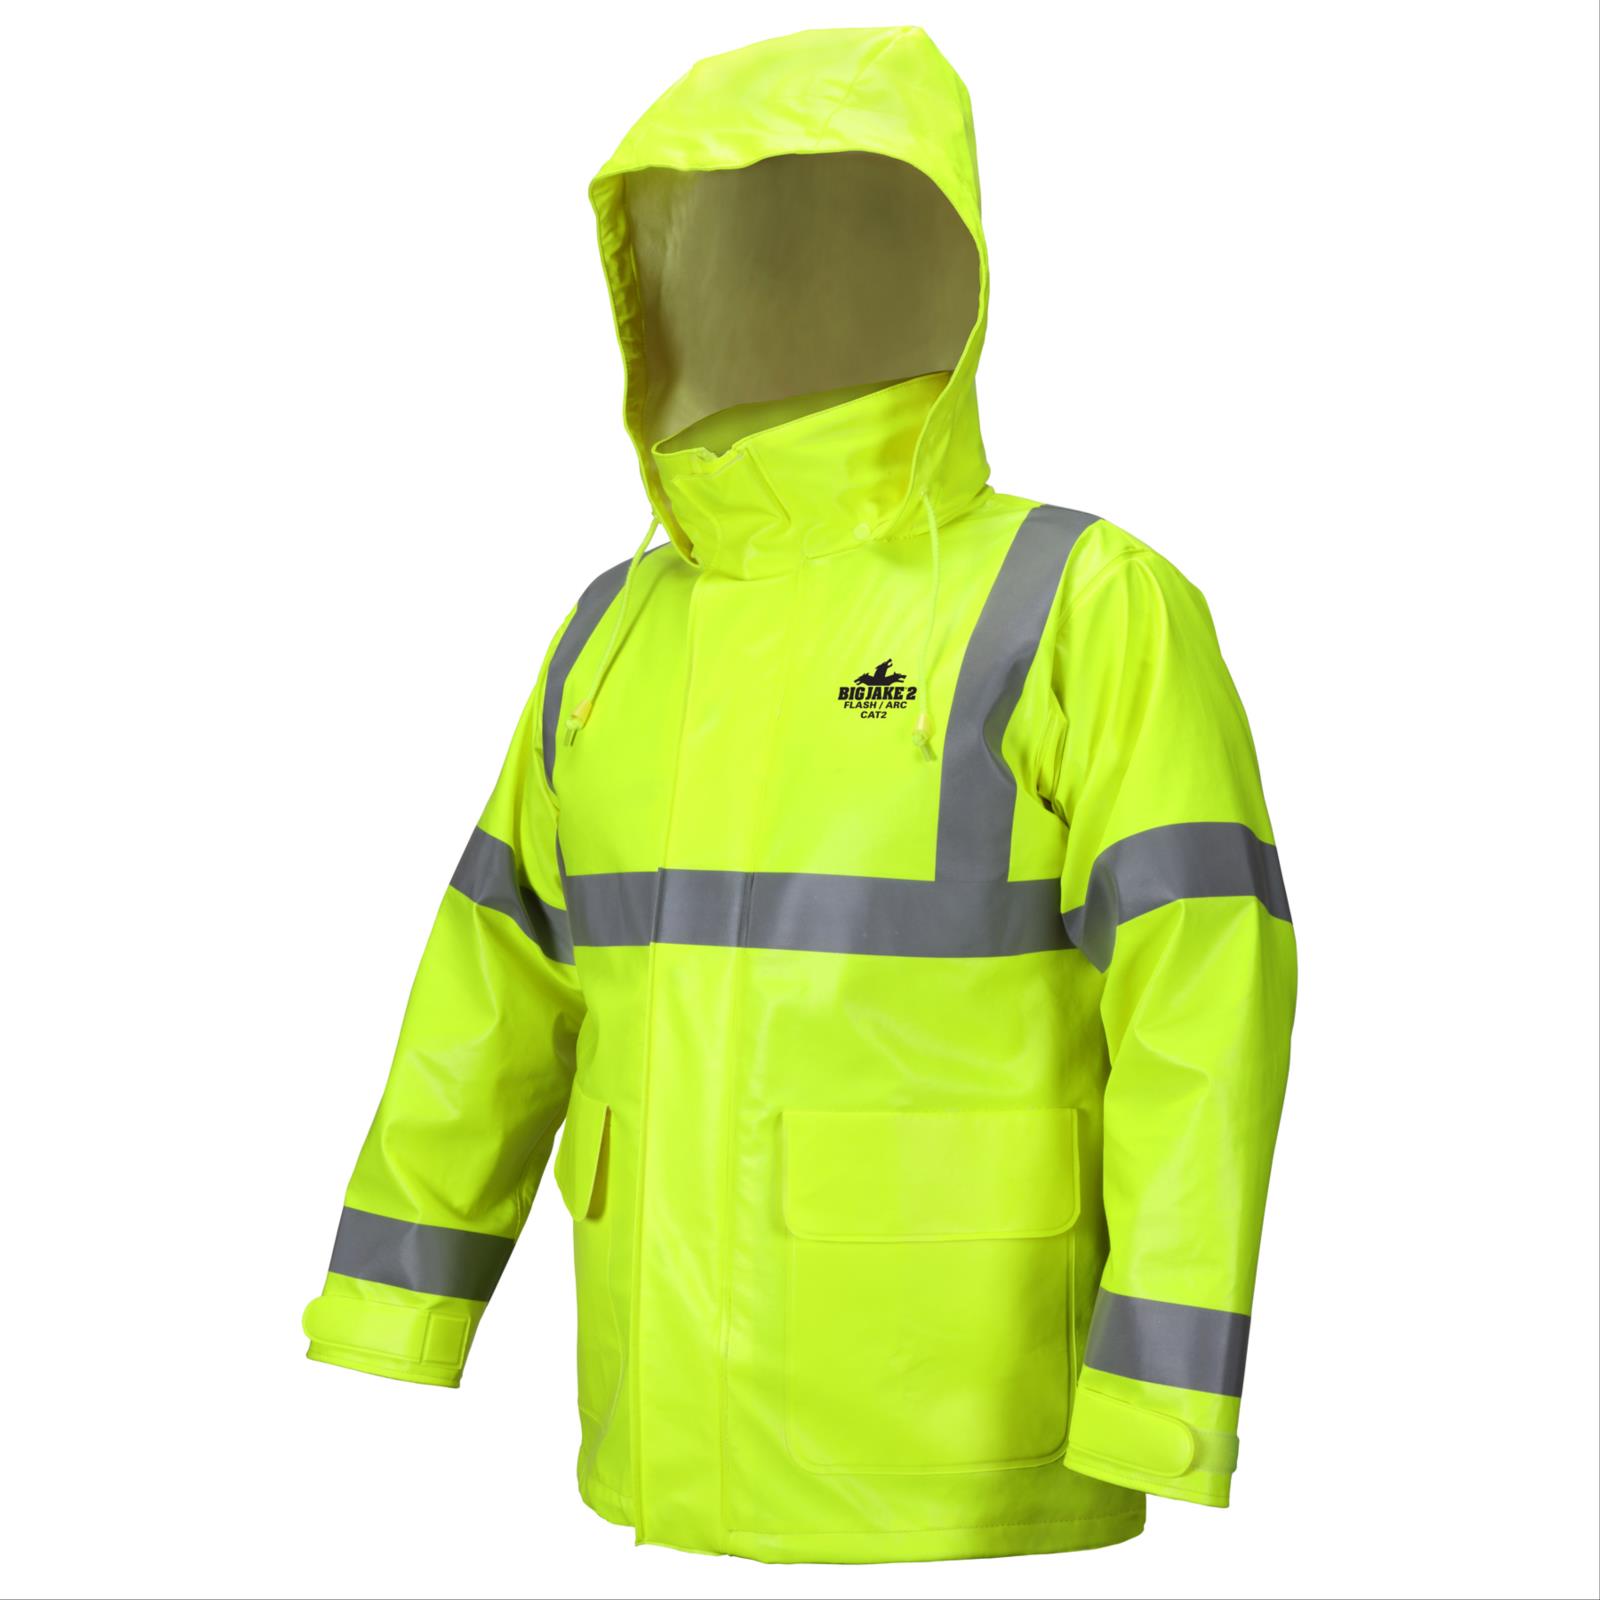 Big Jake 2 PVC / Nomex® Flame Resistant Rainwear